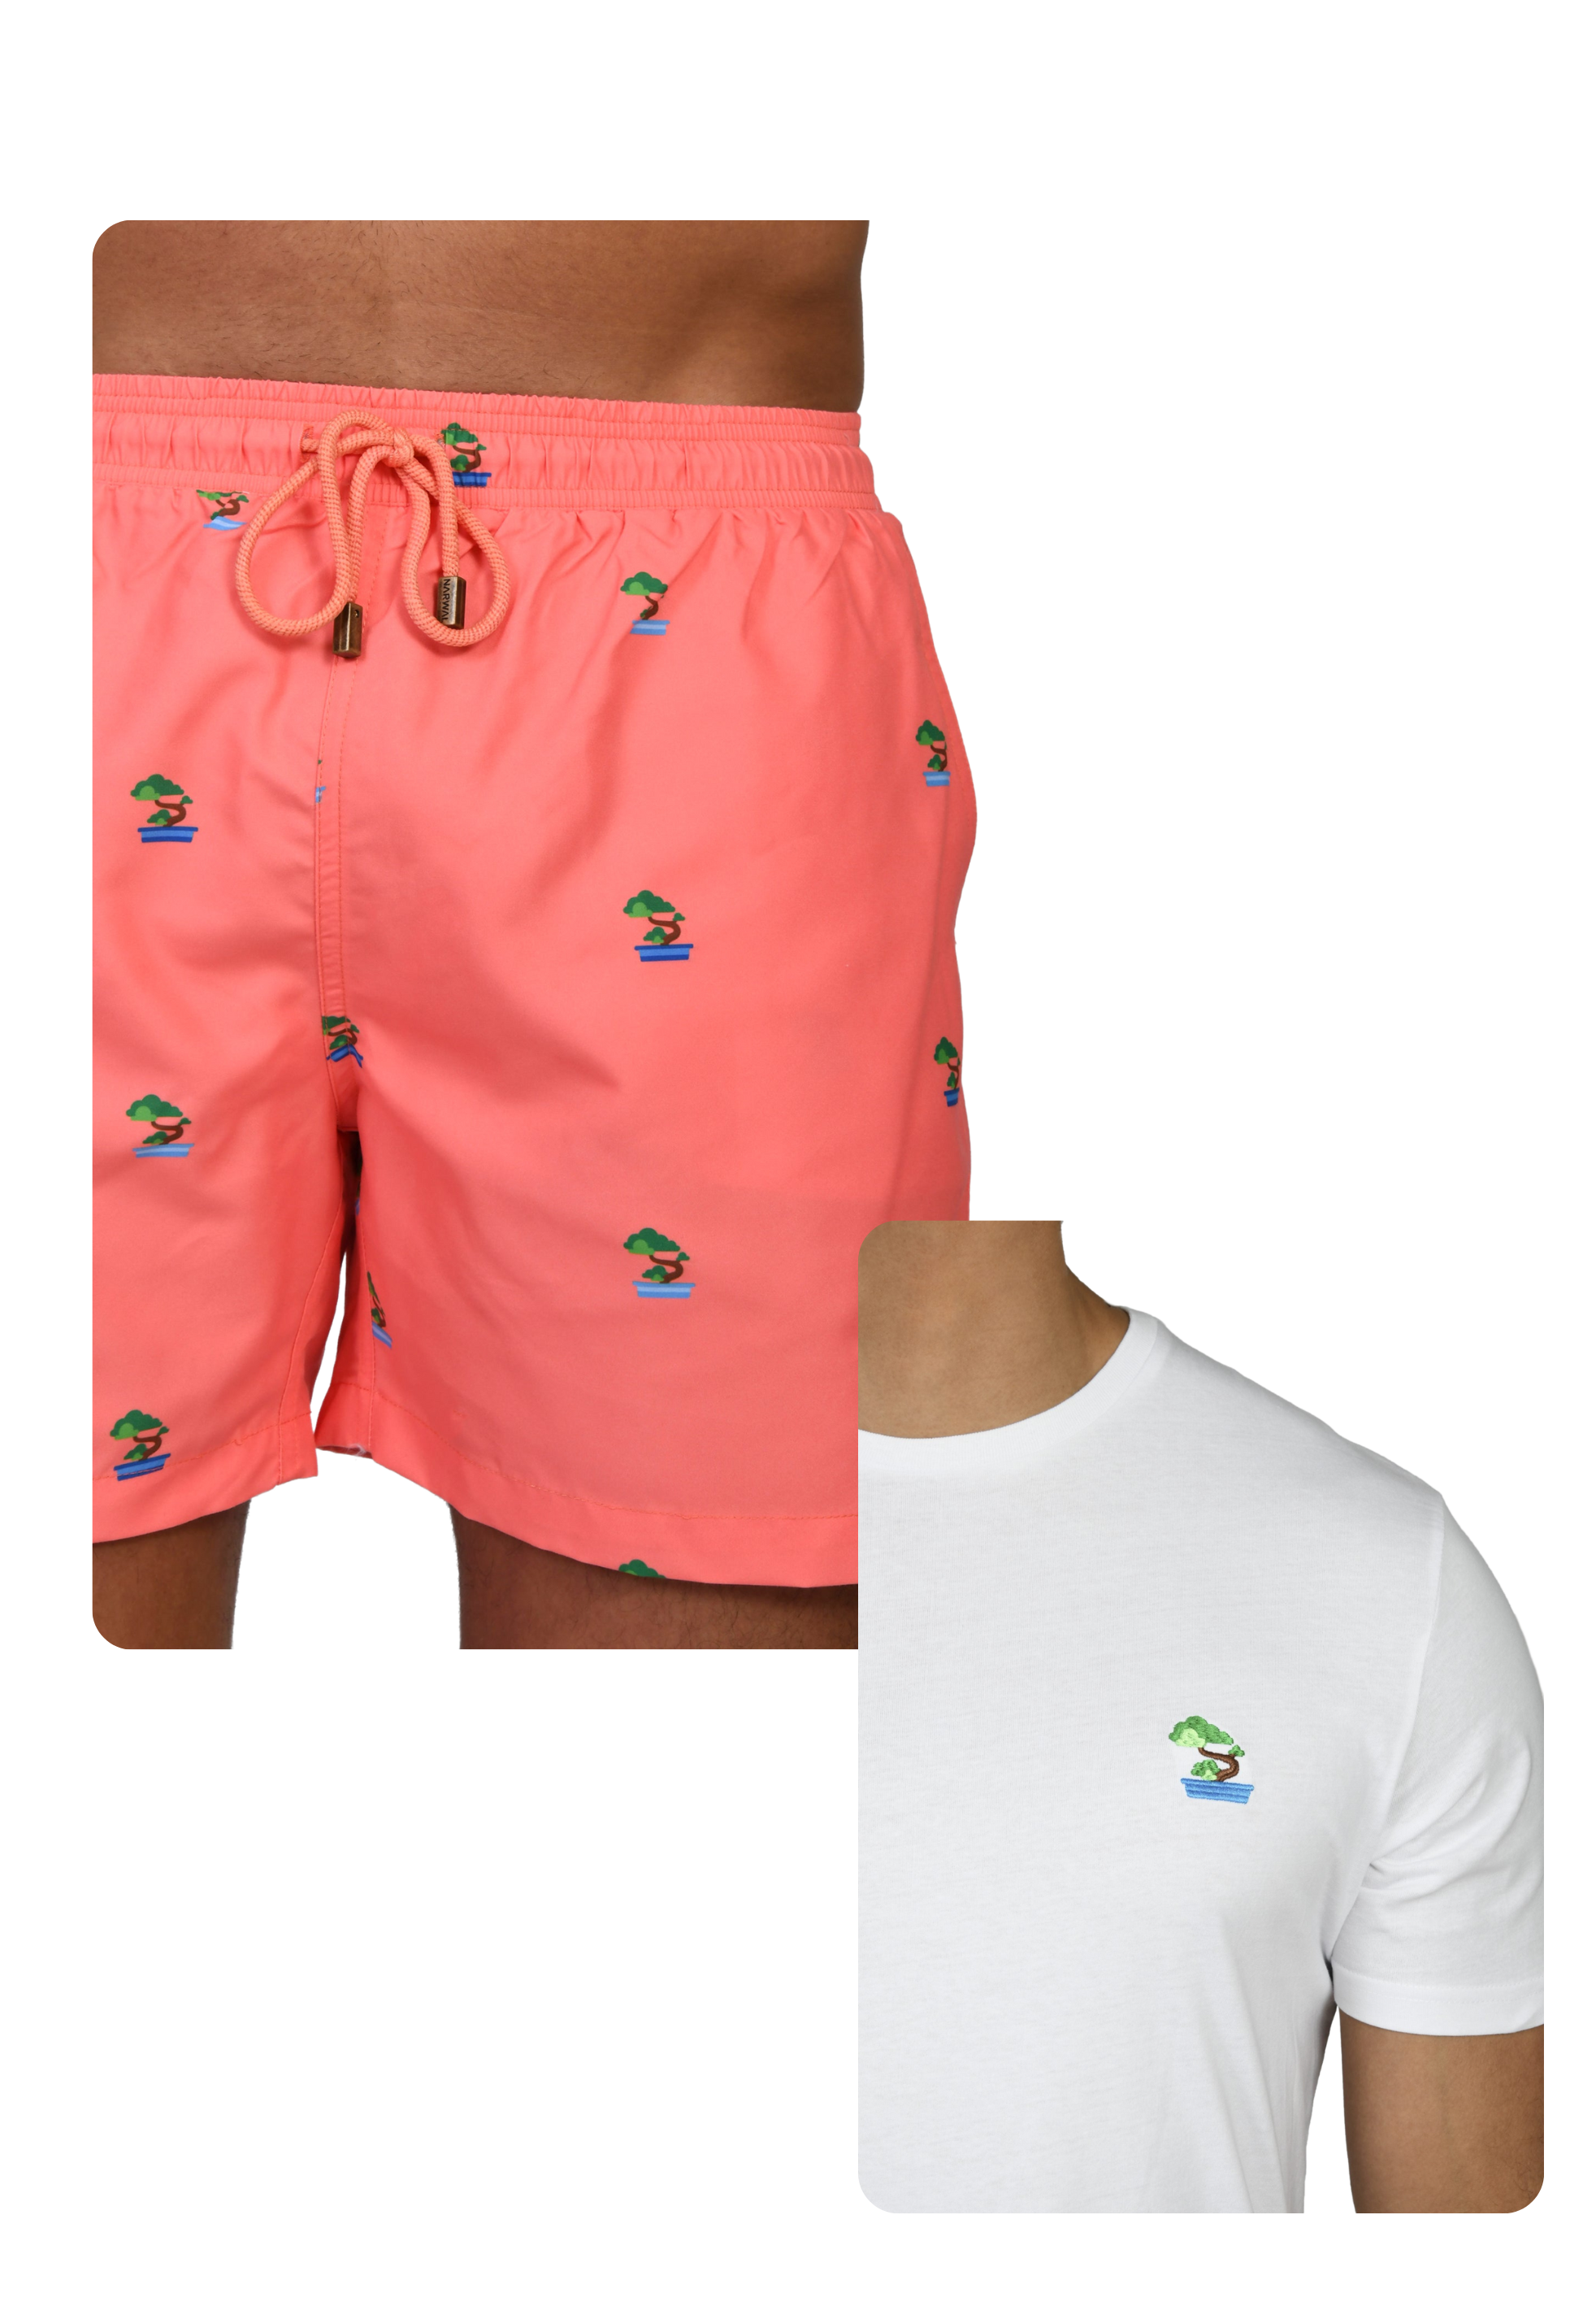 Bonsai Swim Trunks & T-shirt Bundle